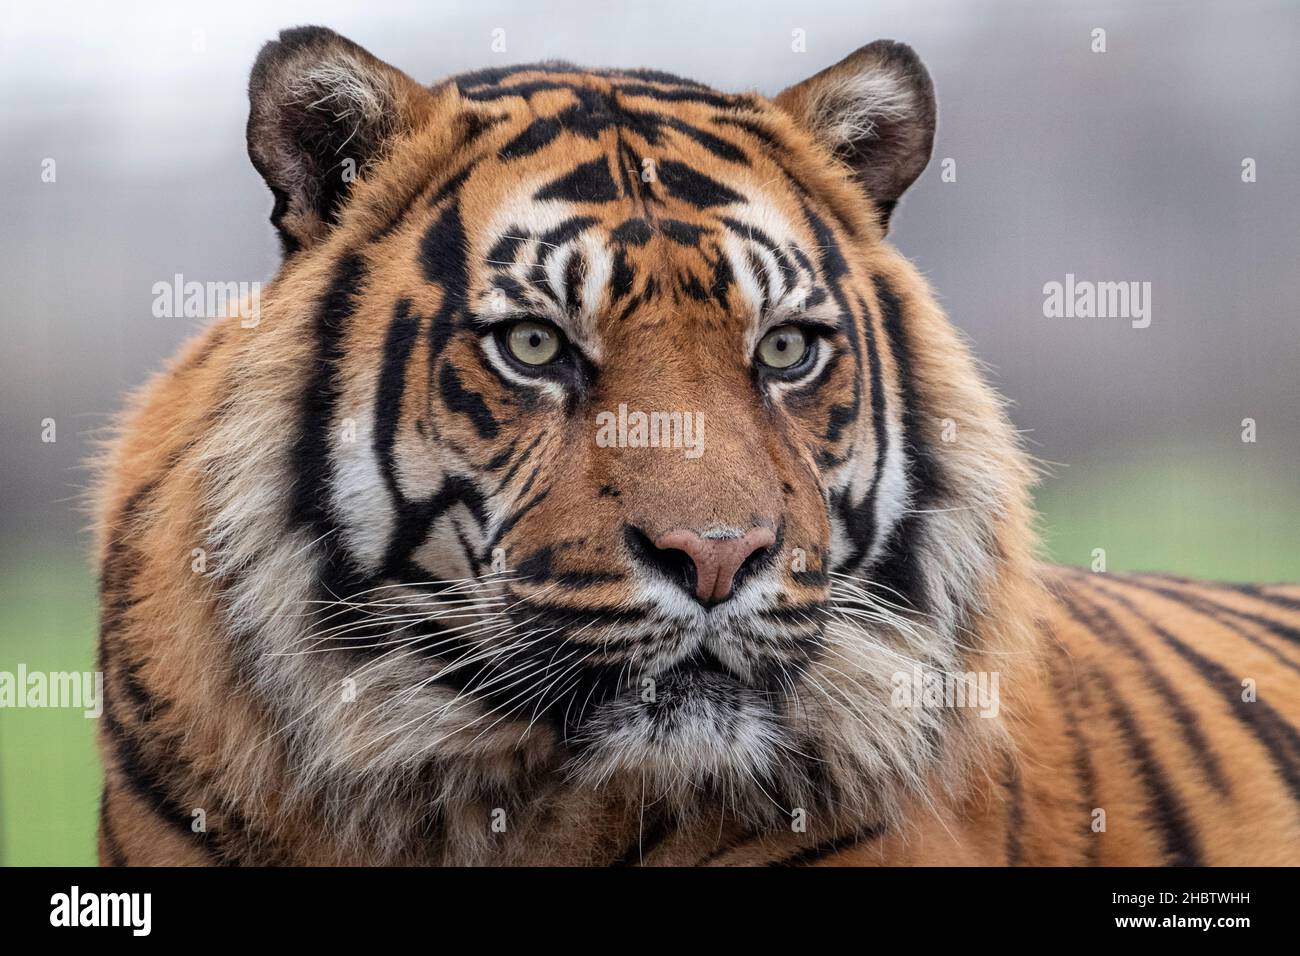 Male Sumatran tiger looking towards camera Stock Photo